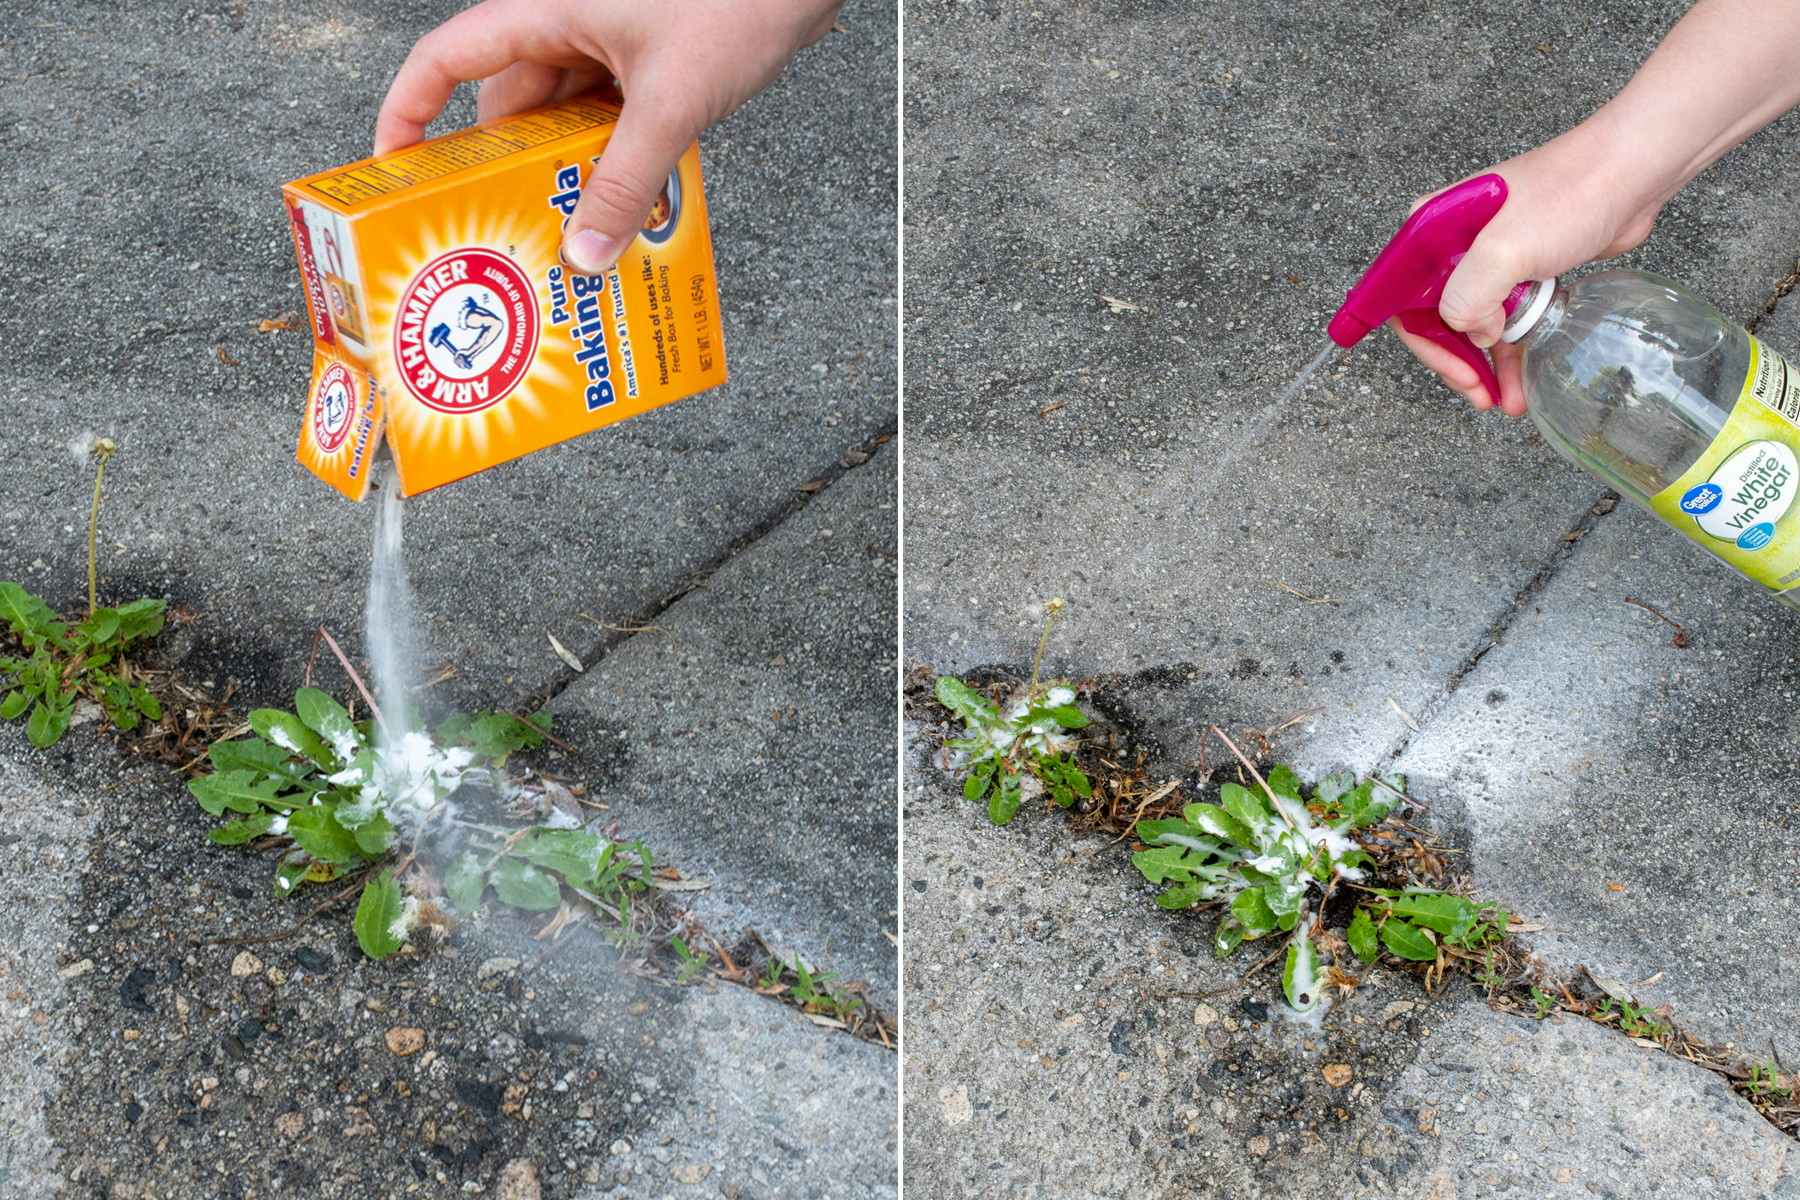 Baking soda being sprinkled on a sidewalk crack then sprayed with vinegar to kill weeds